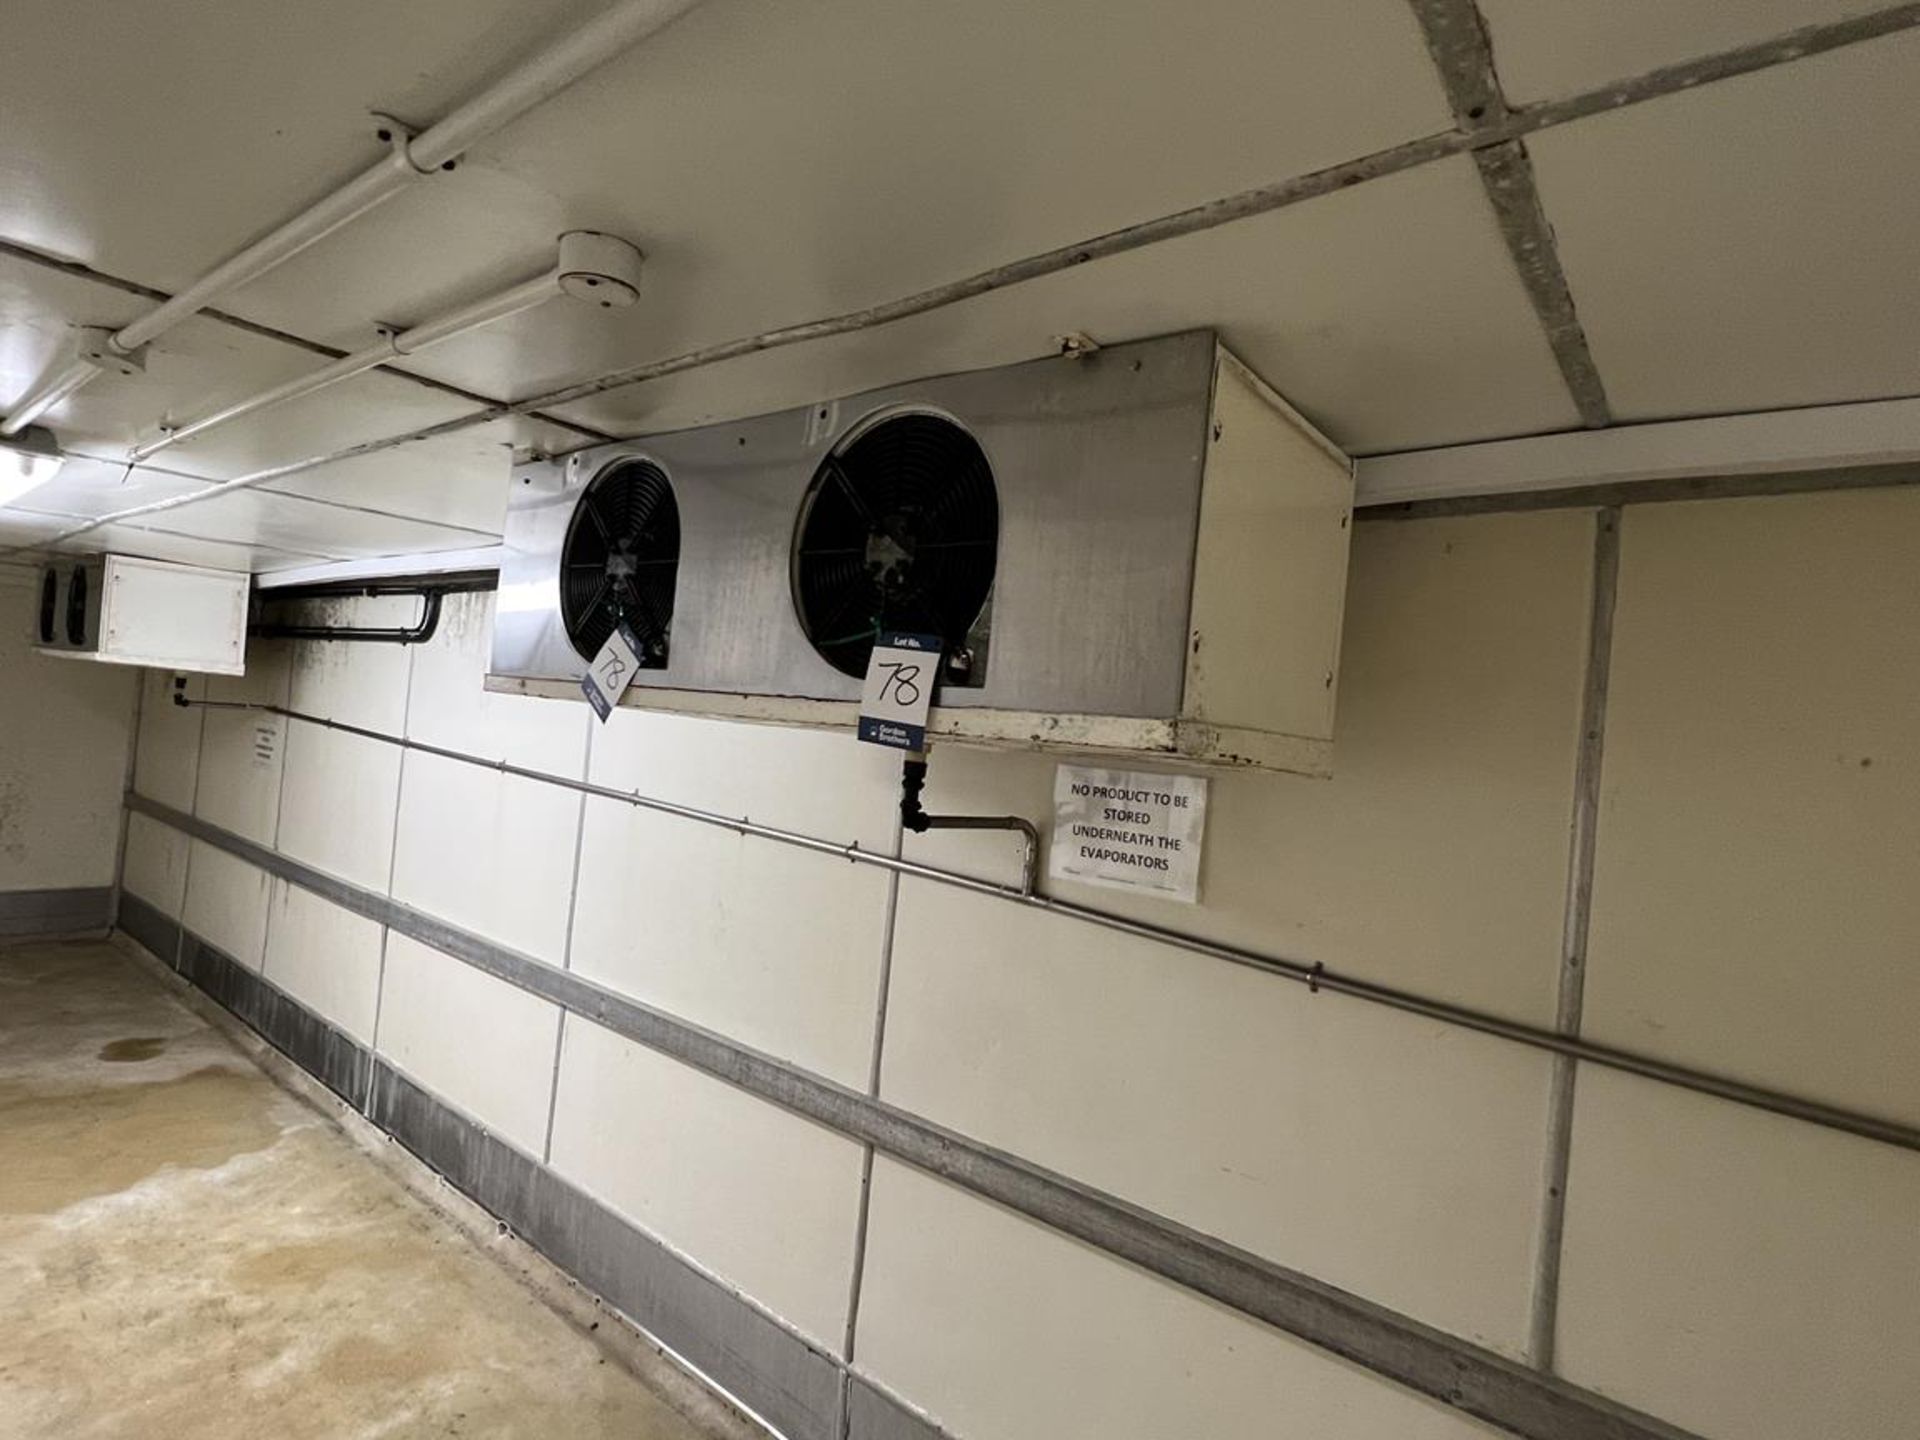 2x (no.) twin fan ceiling mounted evaporators (Make unknown)